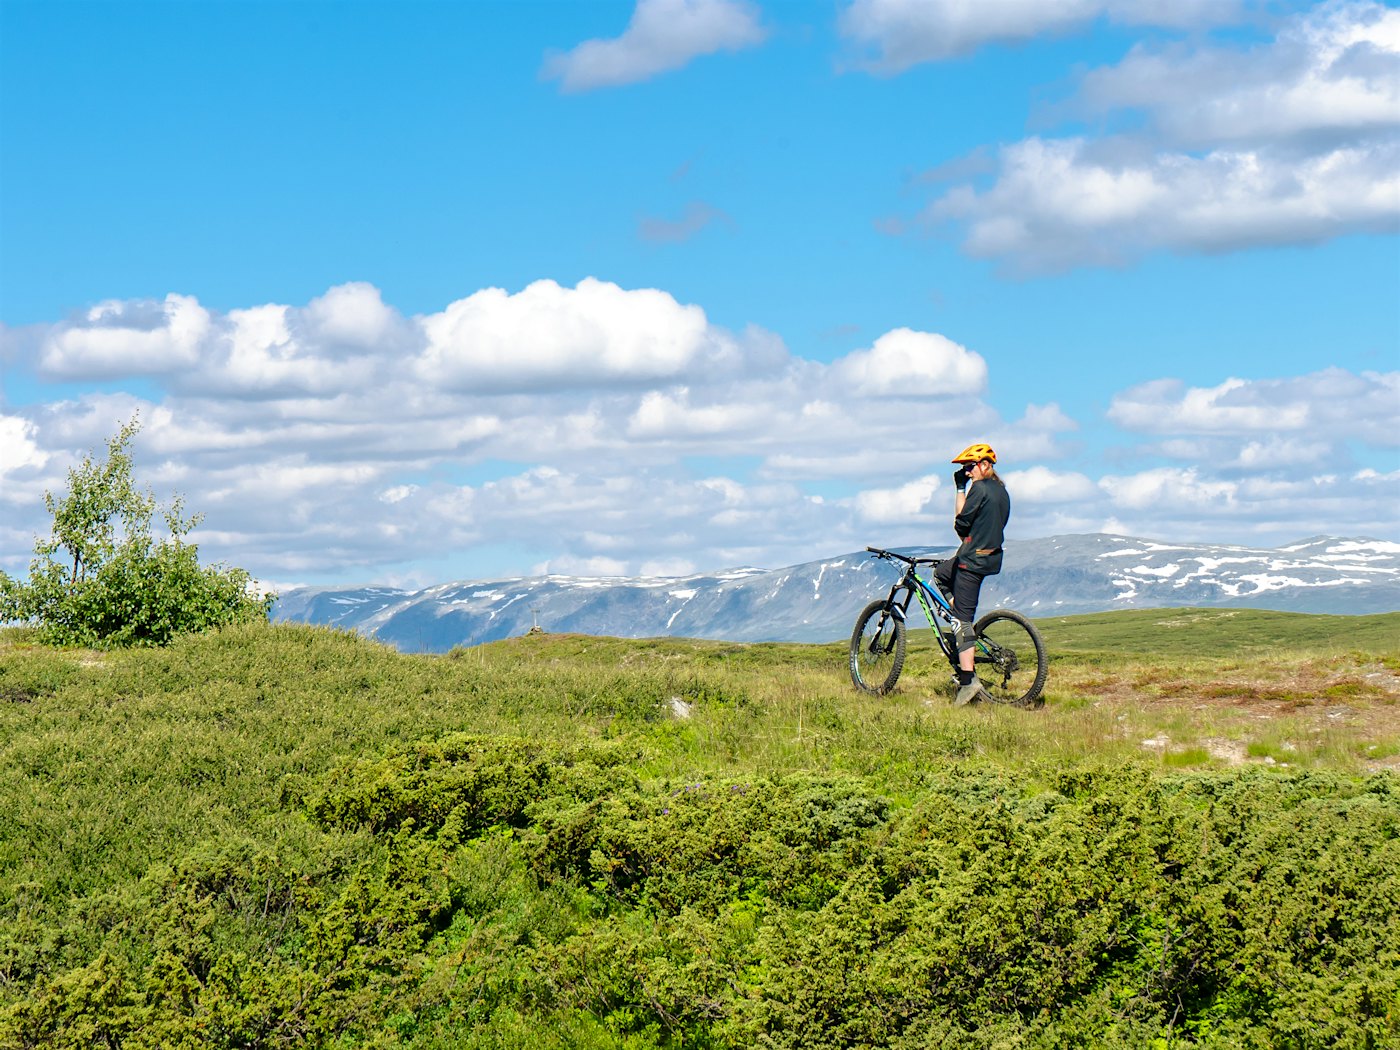 A boy rides a mountain bike in good weather. Photo